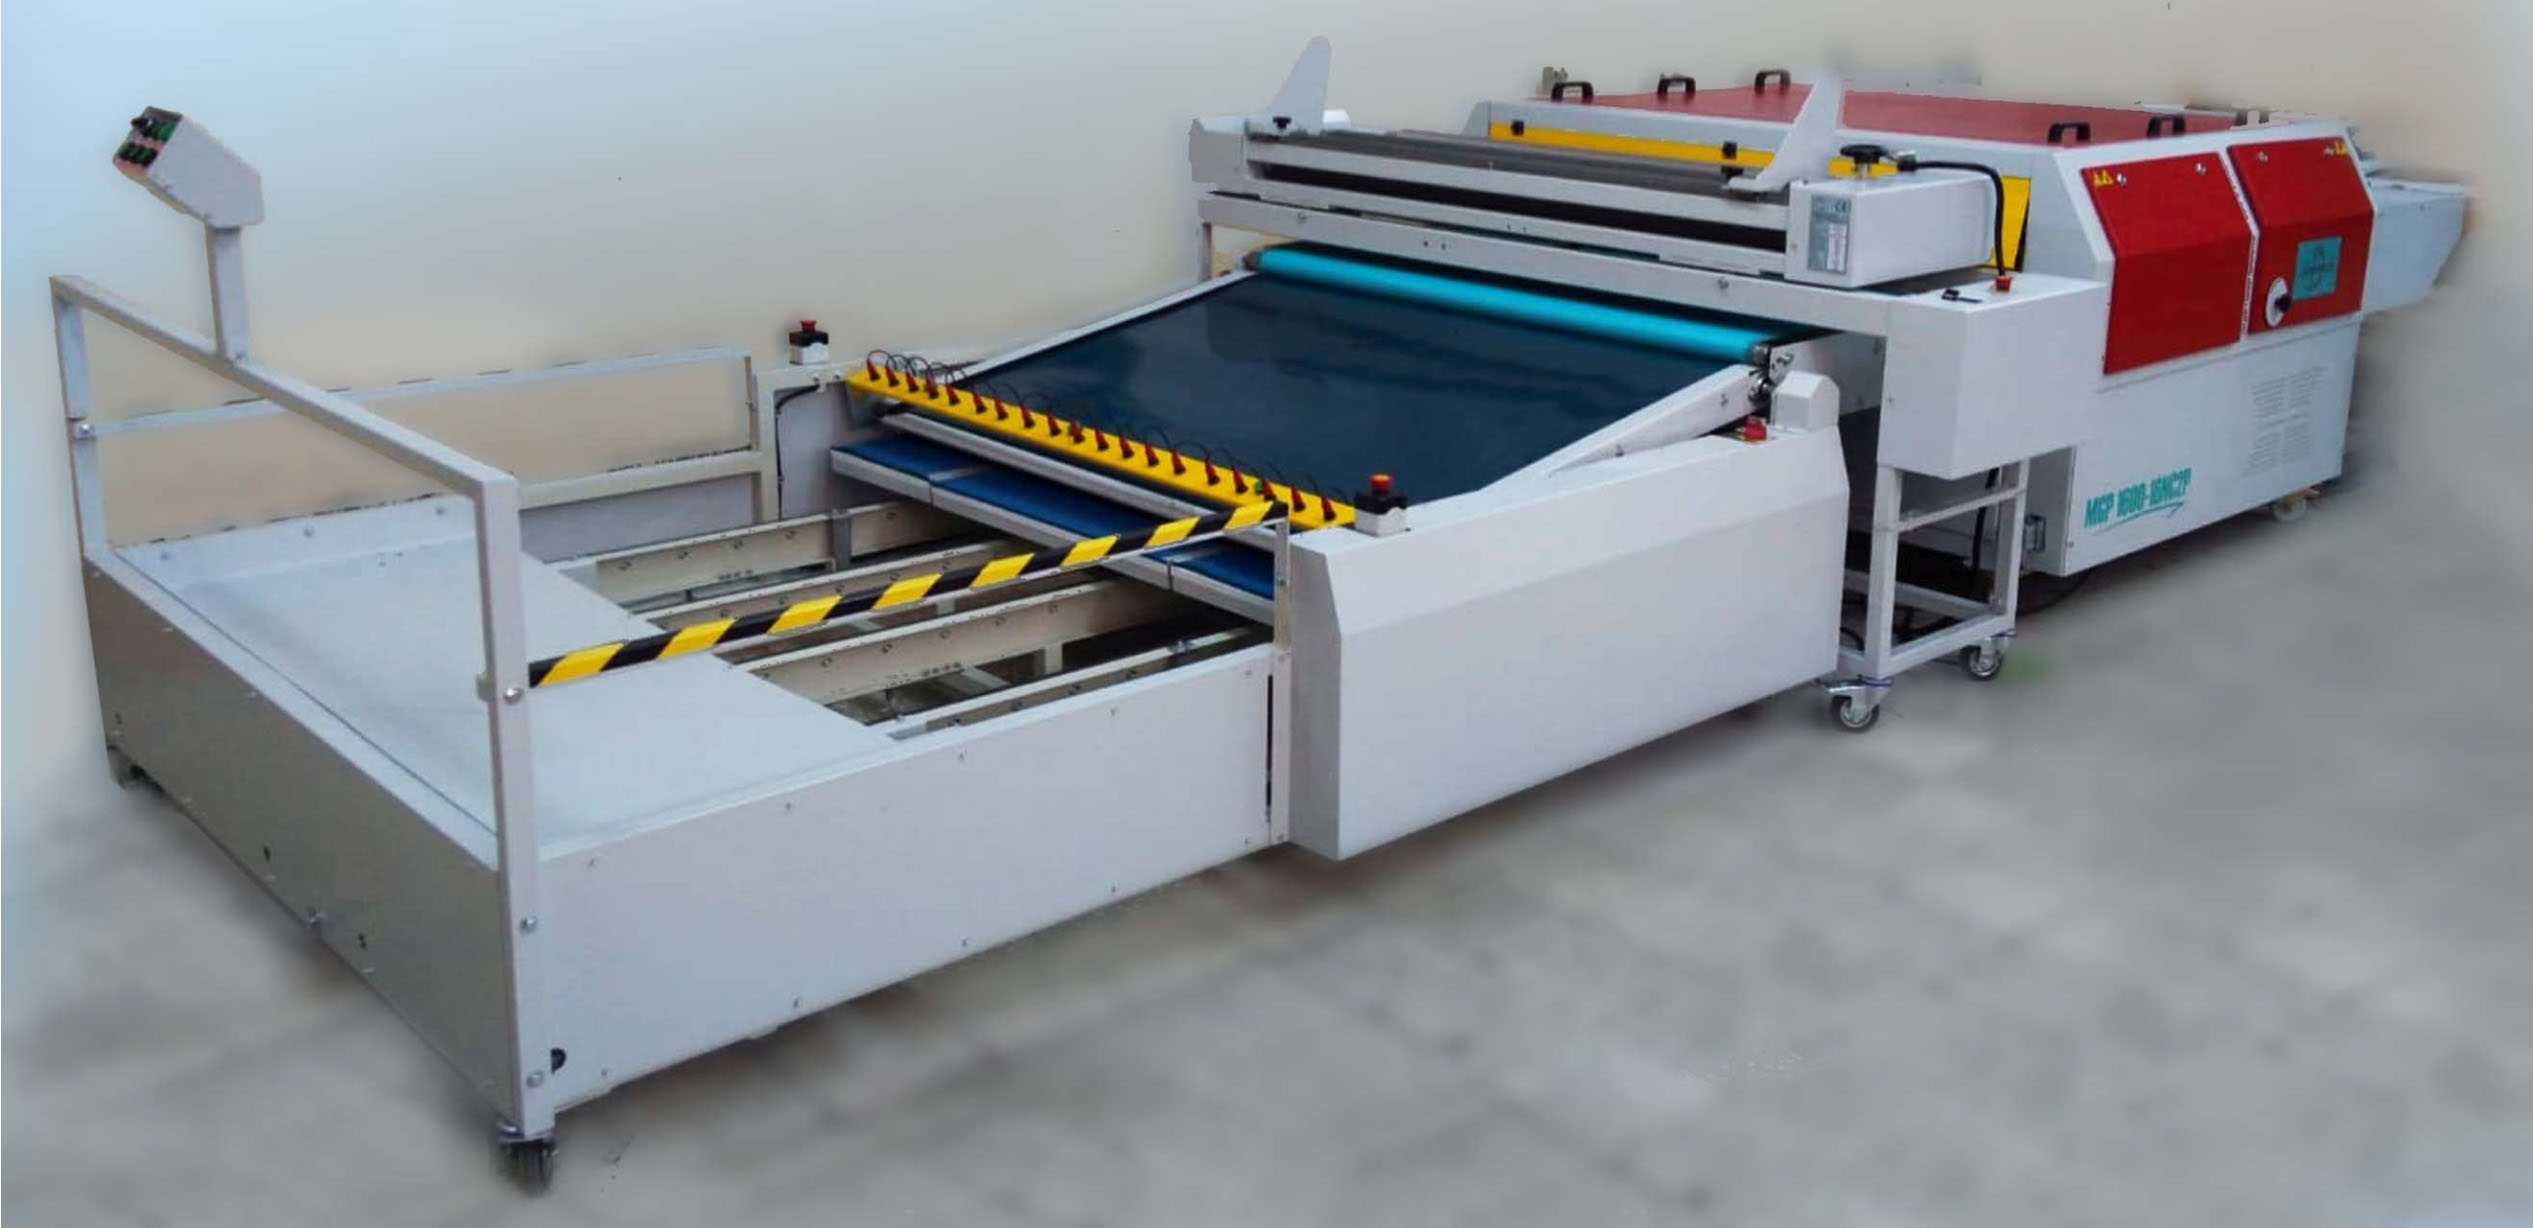 Automatic Fabric Cutter Machine with Unwinder - China Fabric